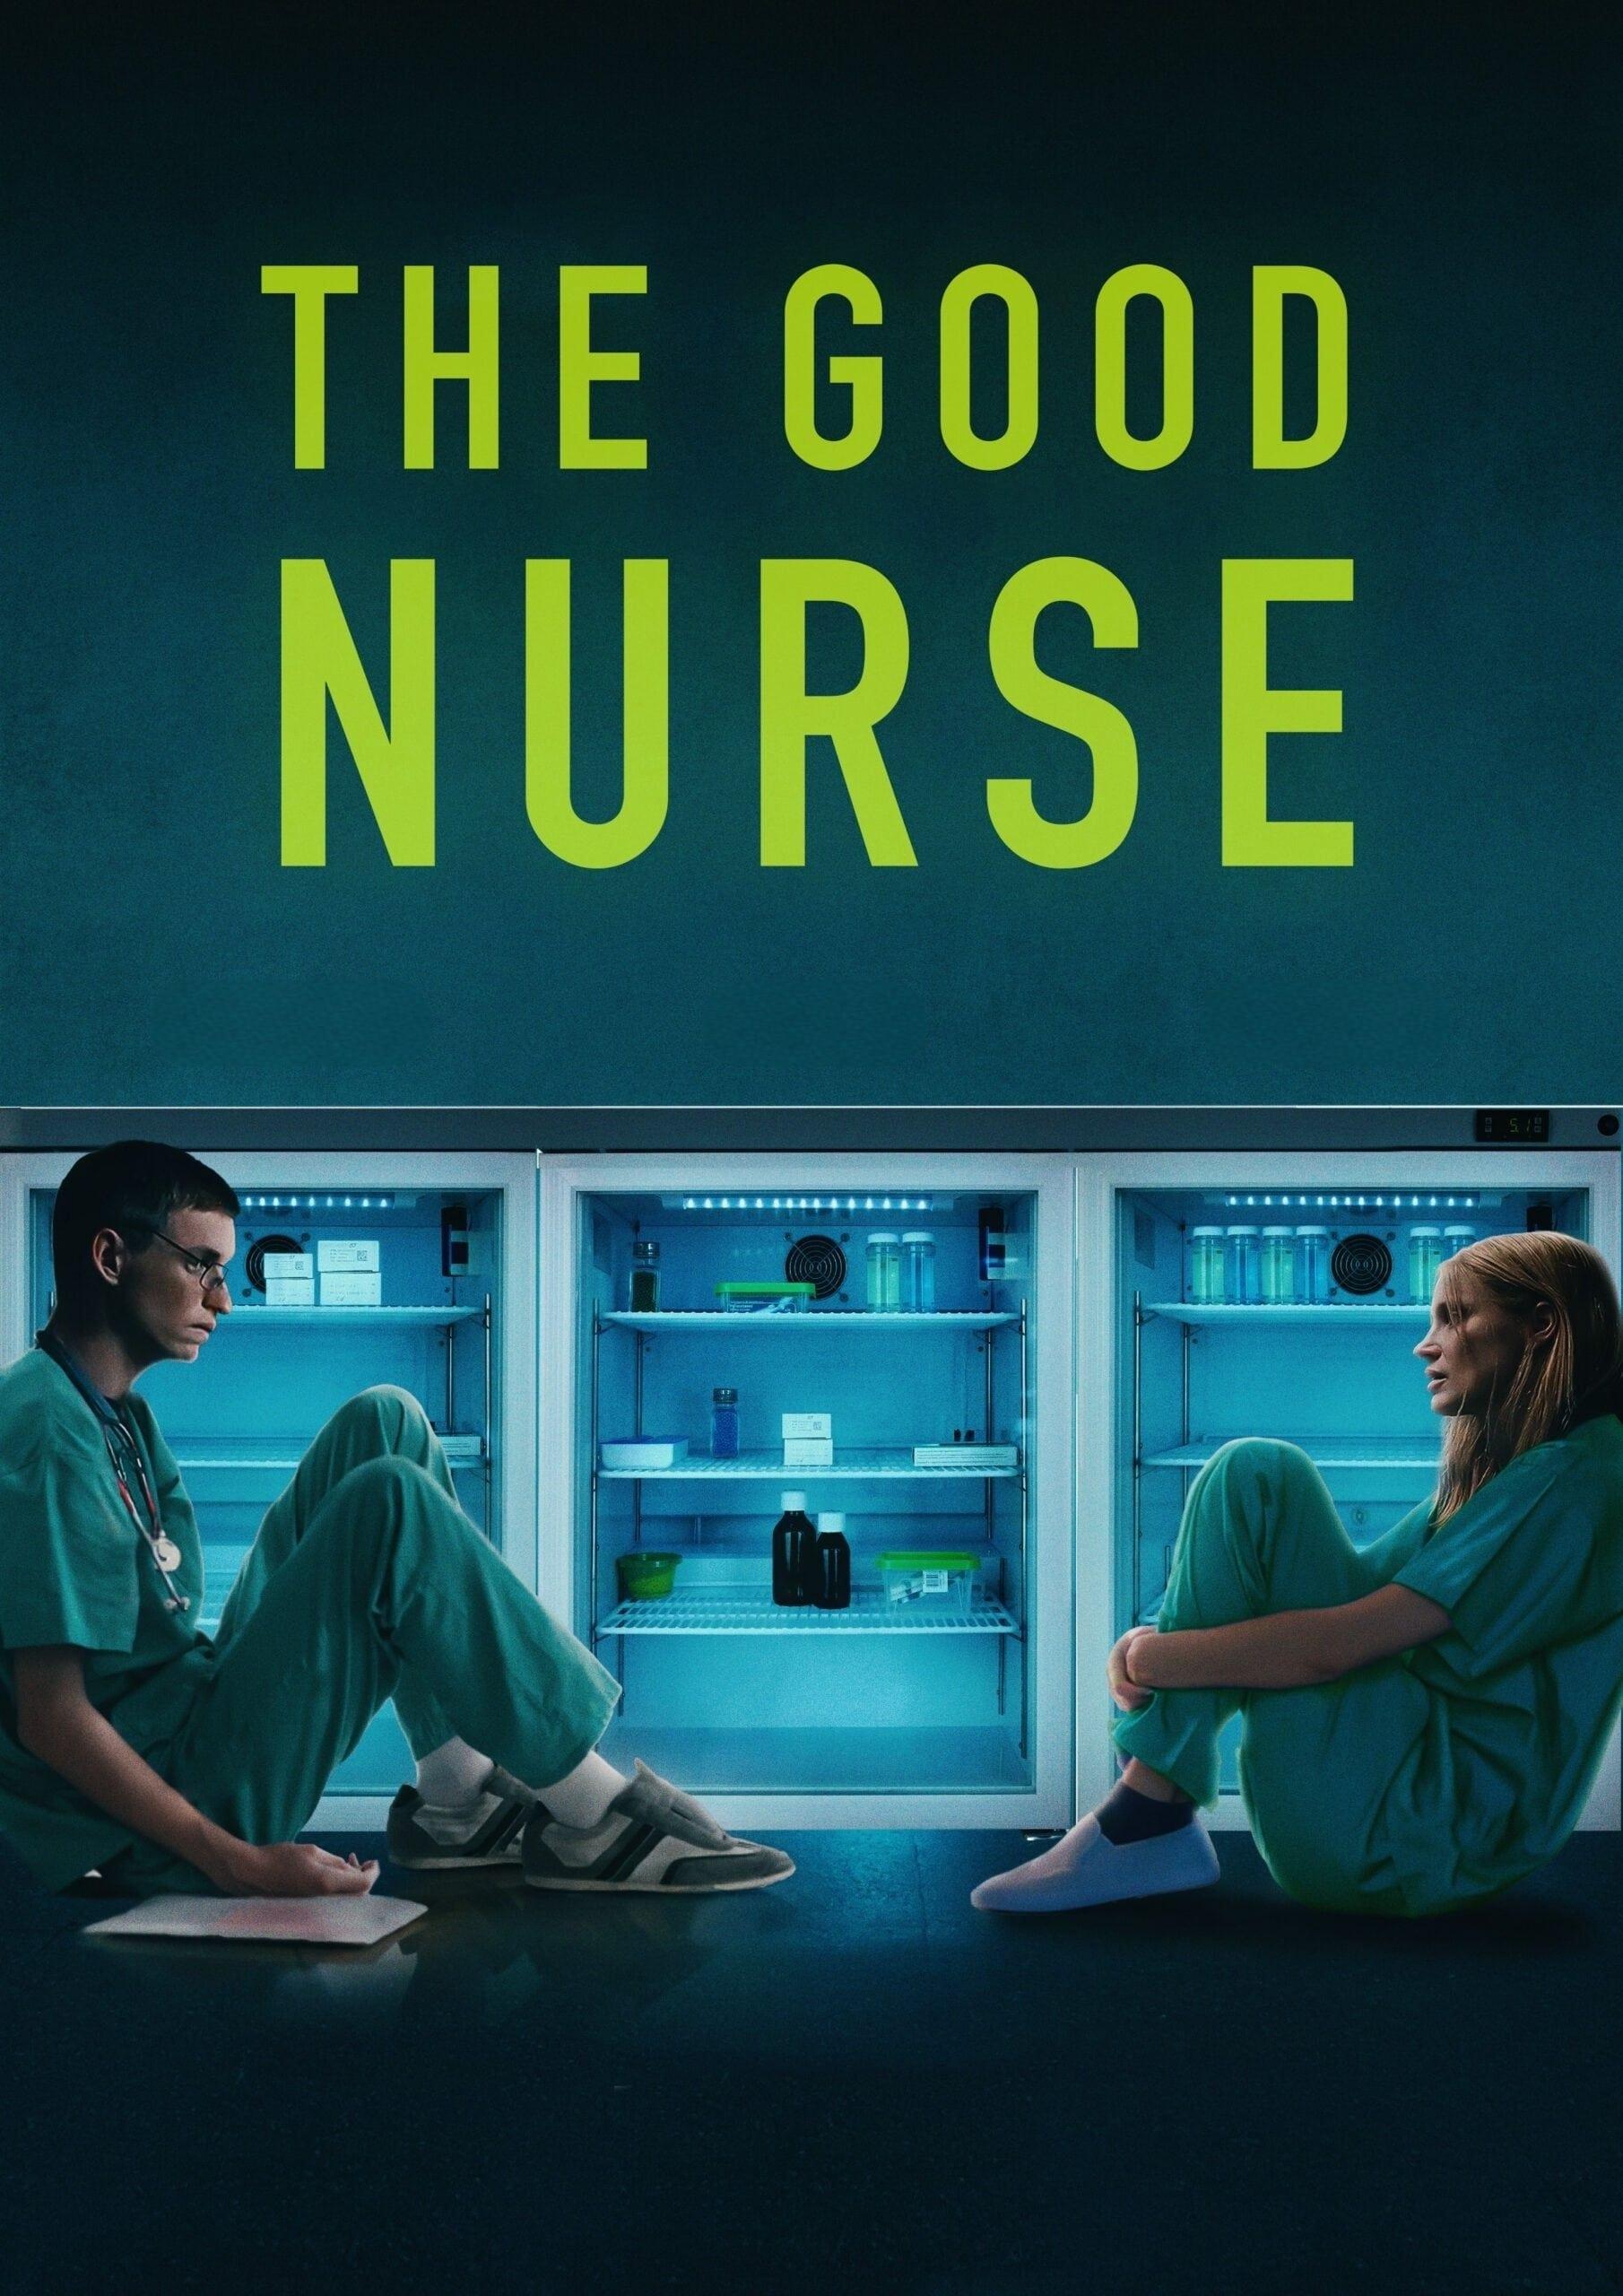 The Good Nurse poster